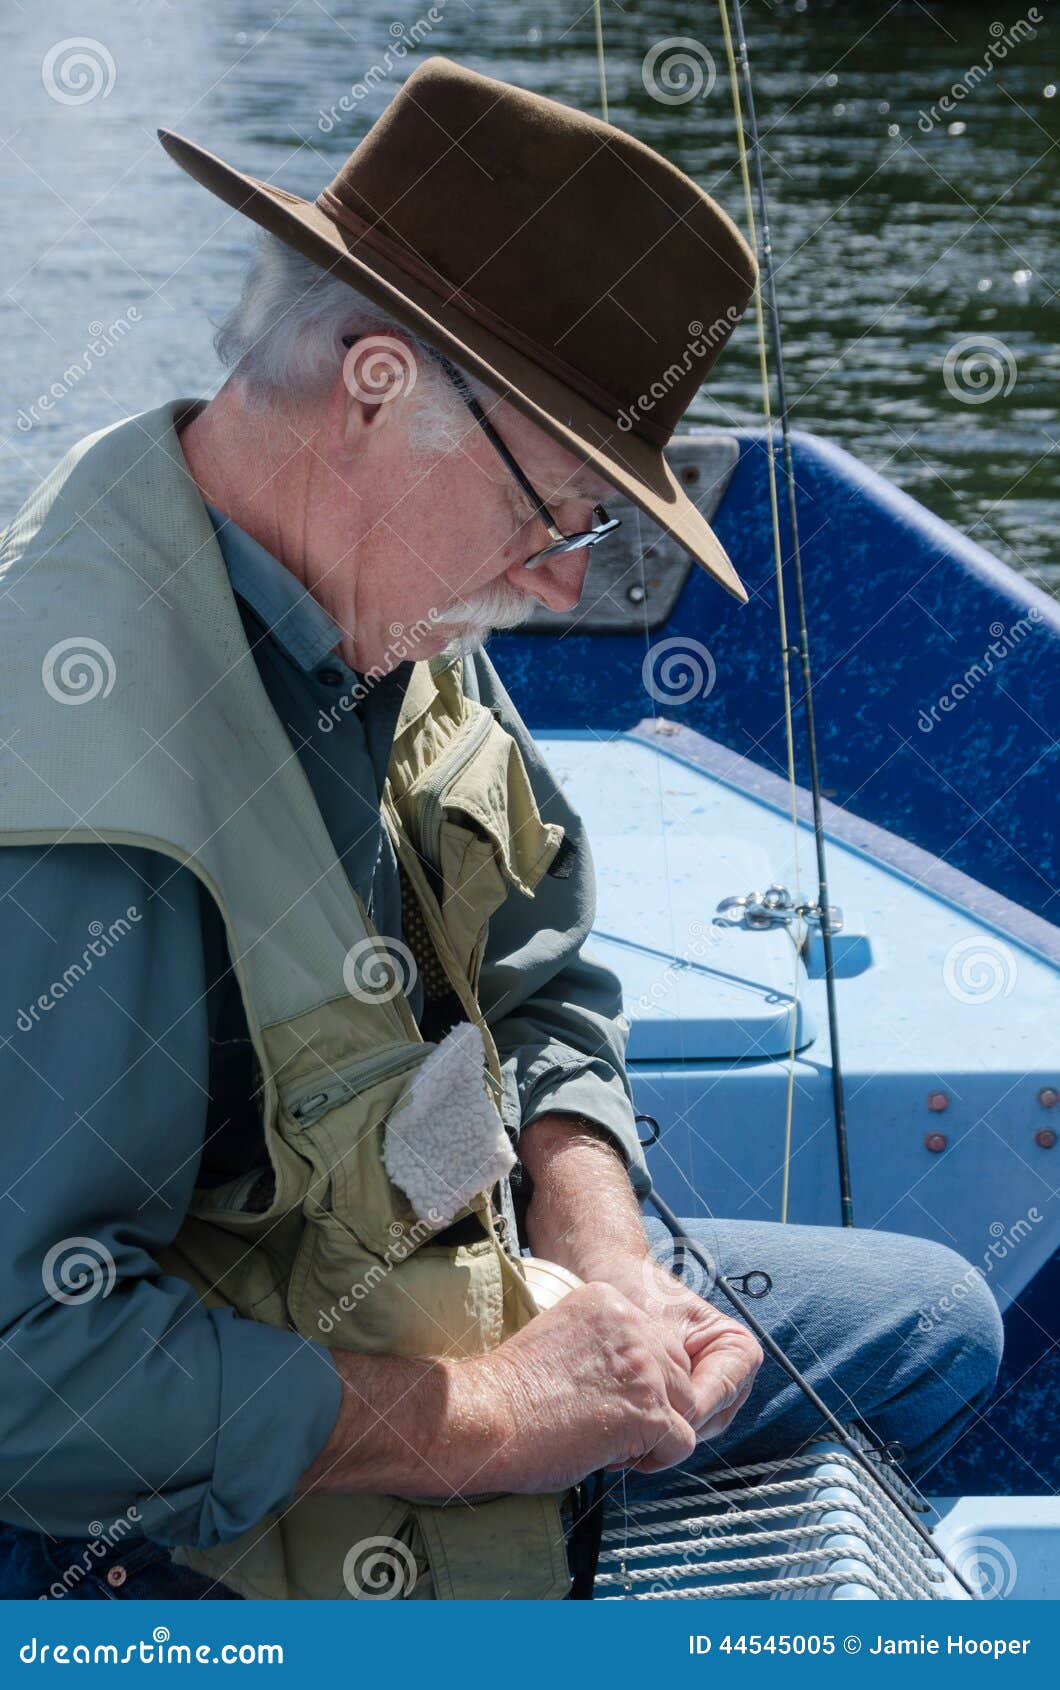 https://thumbs.dreamstime.com/z/baiting-hook-senior-man-concentrates-as-prepares-his-line-fishing-44545005.jpg